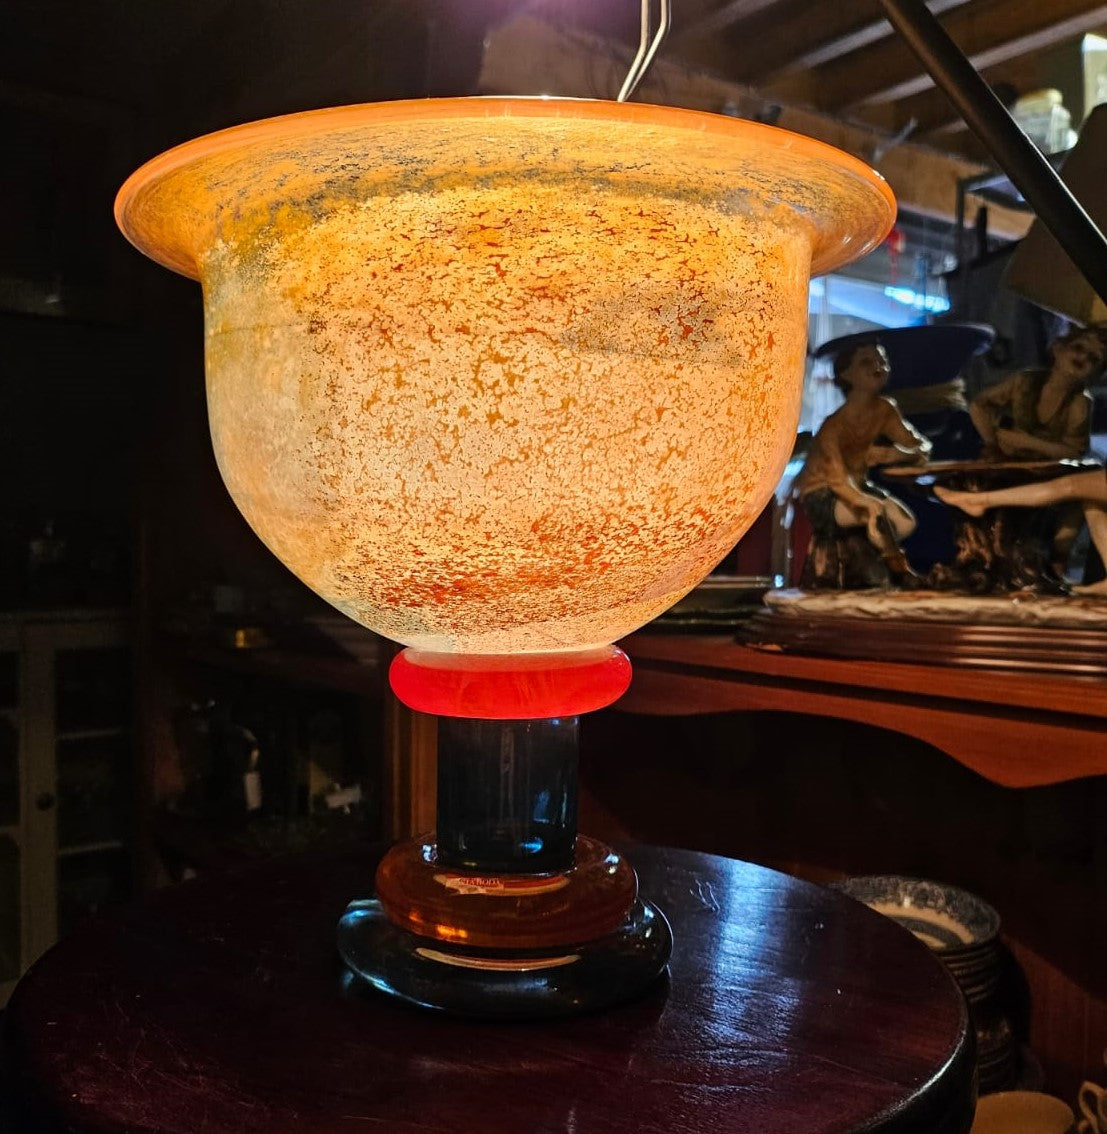 Kosta Boda - Large Colourful Art Glass Vase/Urn - 28cm